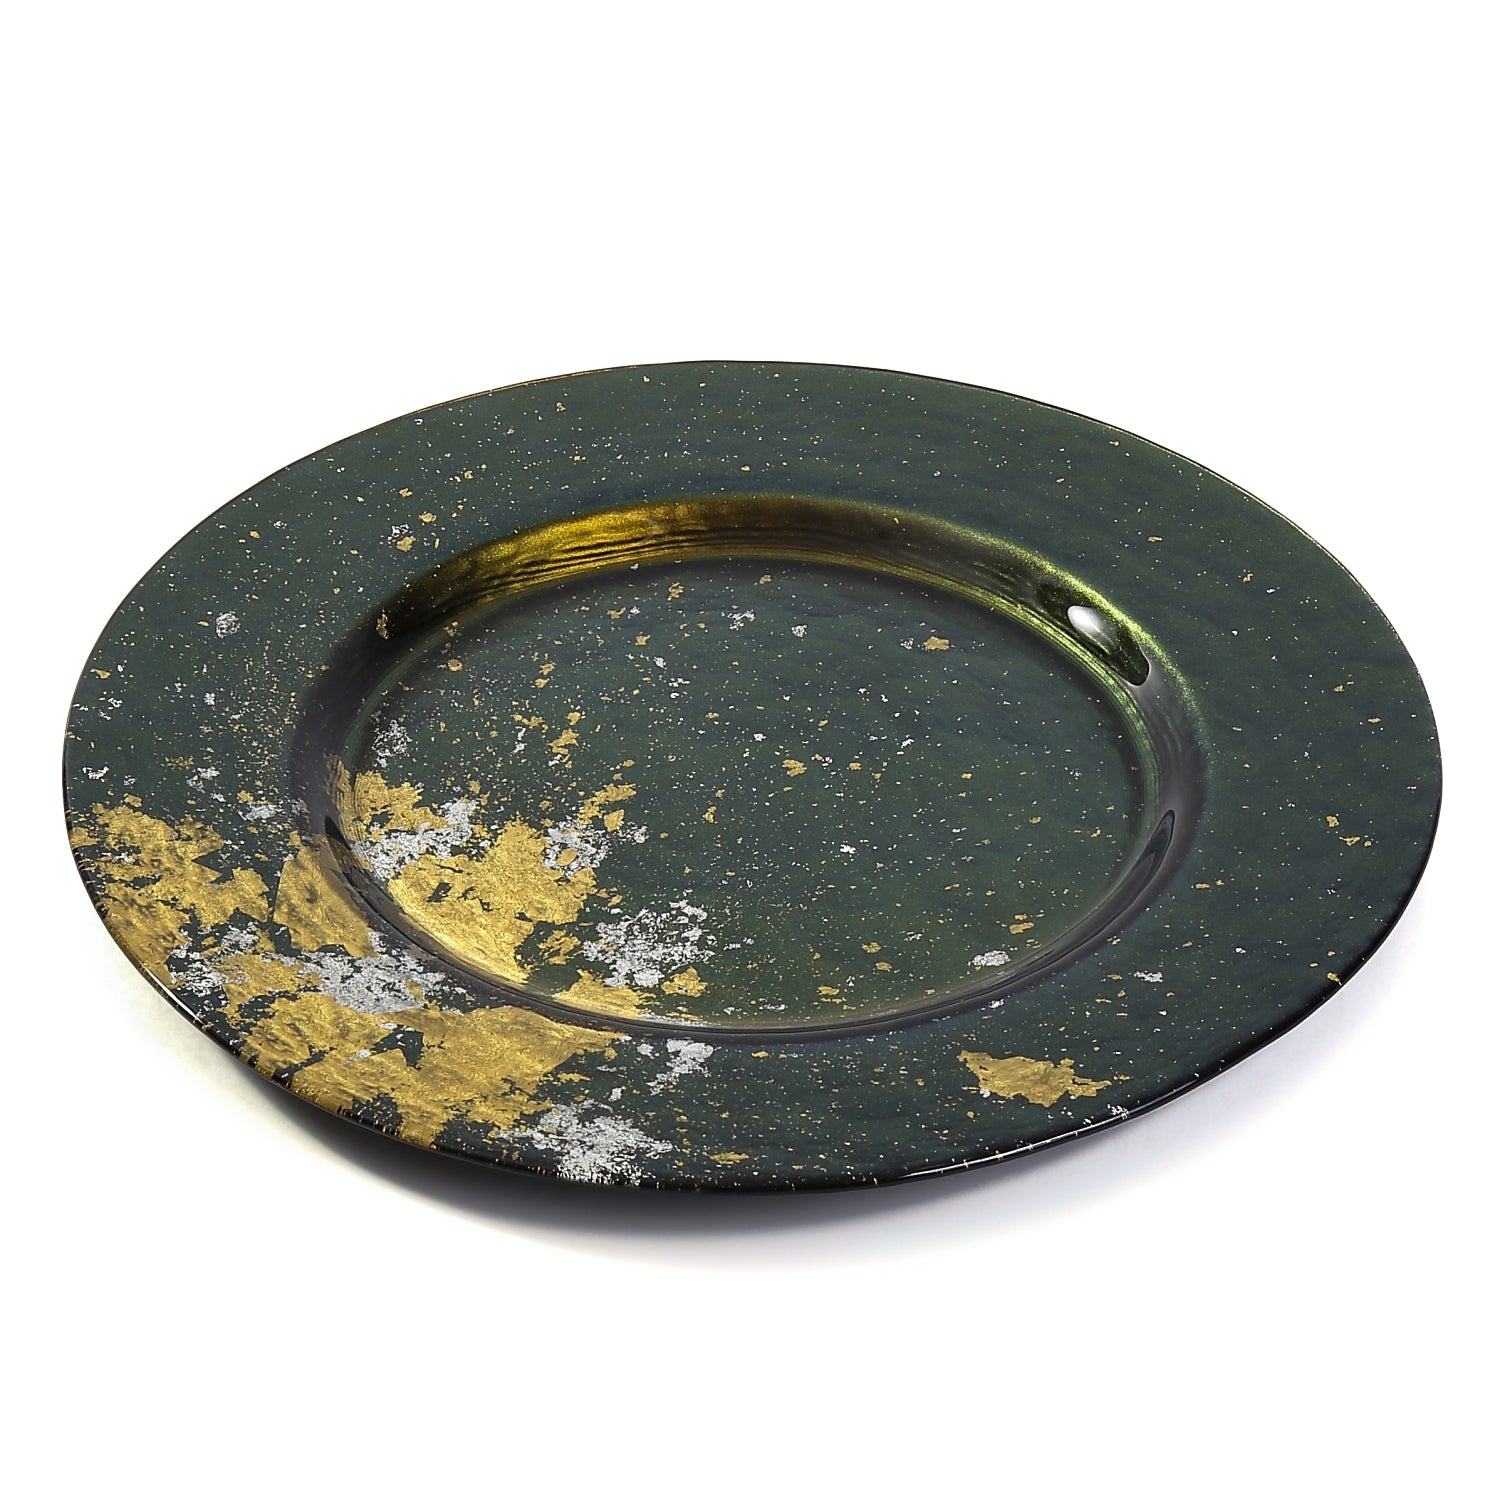 Syosaku Japanese Urushi Glass Dinner Plate 12.5-inch (32cm) Majestic Green with Gold Leaf, Dishwasher Safe